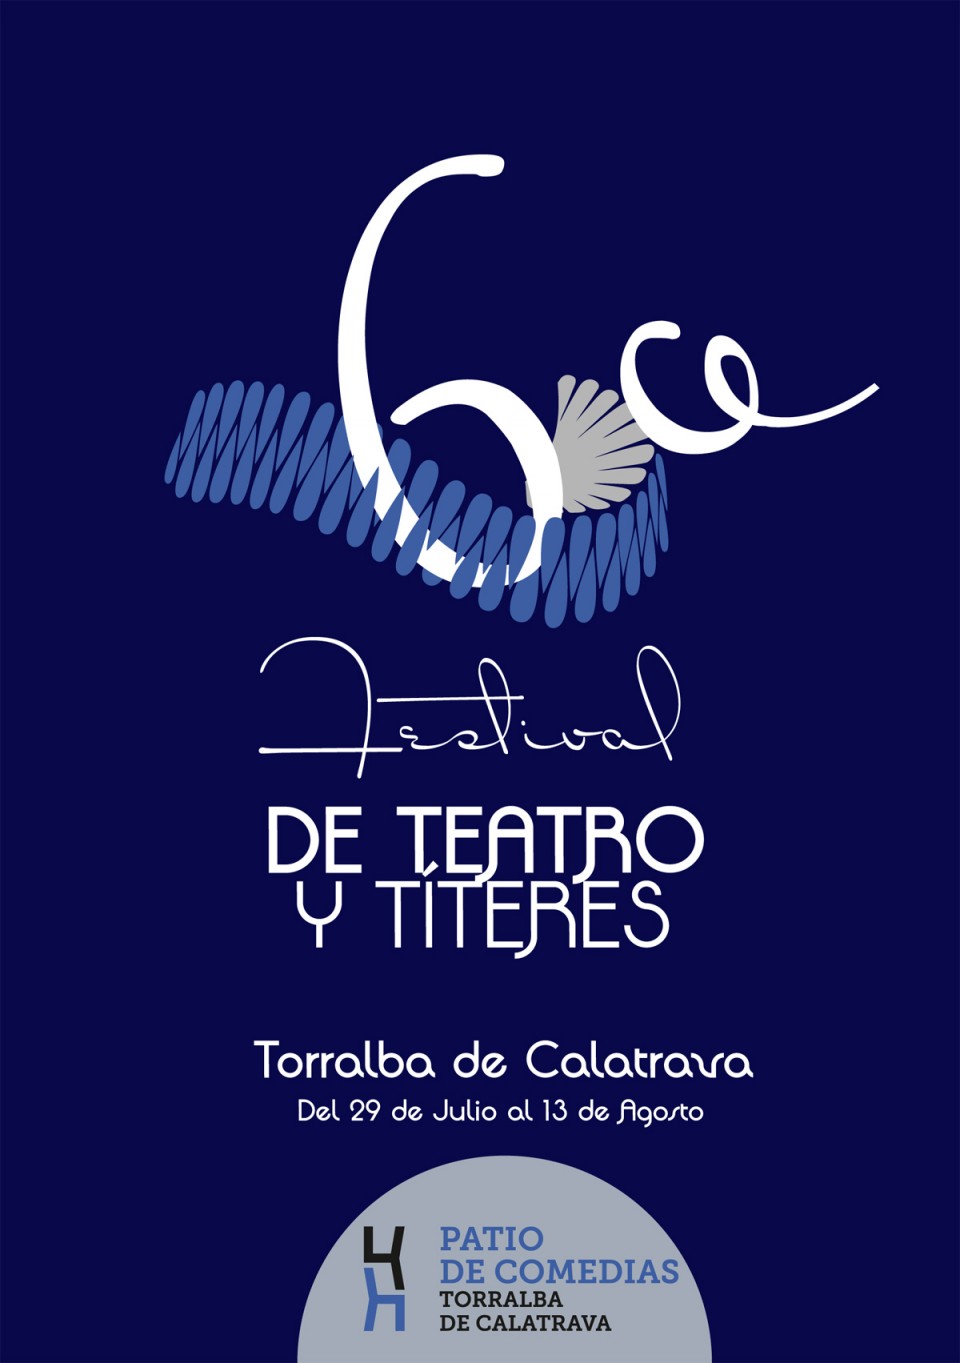 Llega el teatro a Torralba de Calatrava en el 6º Festival de Teatro y Títeres